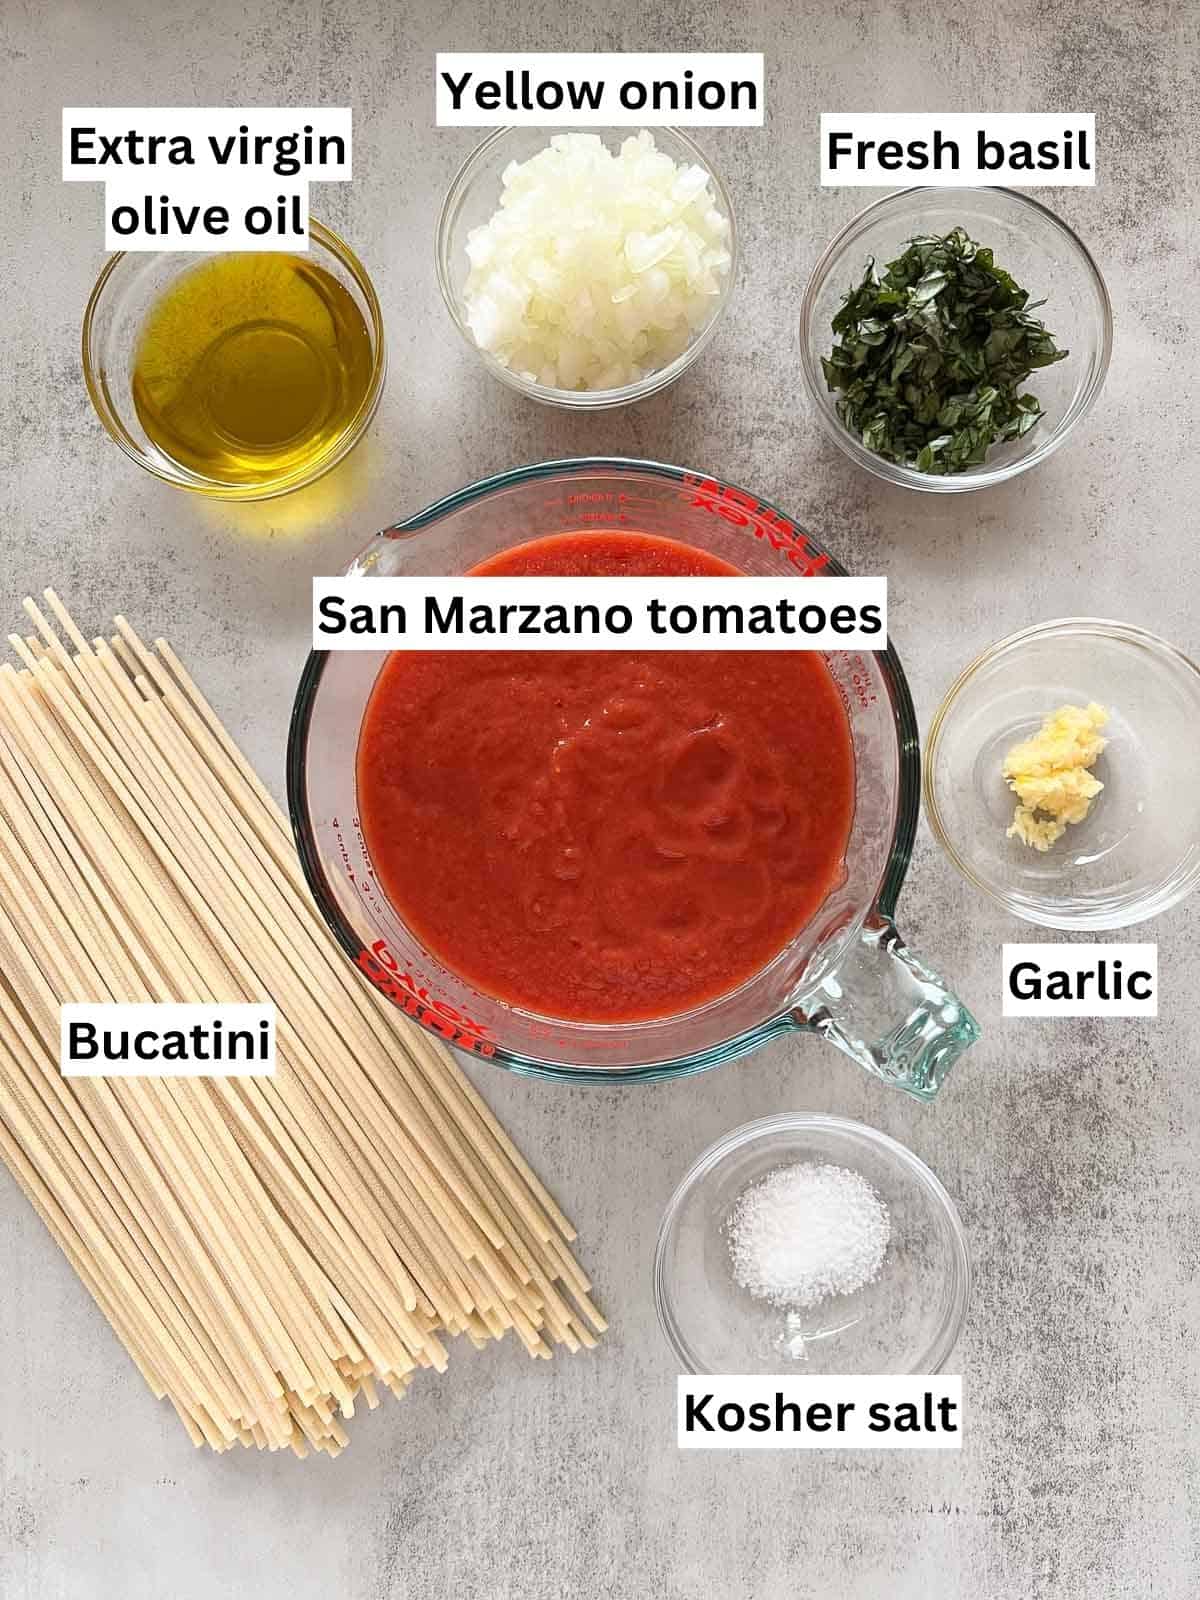 The ingredients to make bucatini pomodoro.